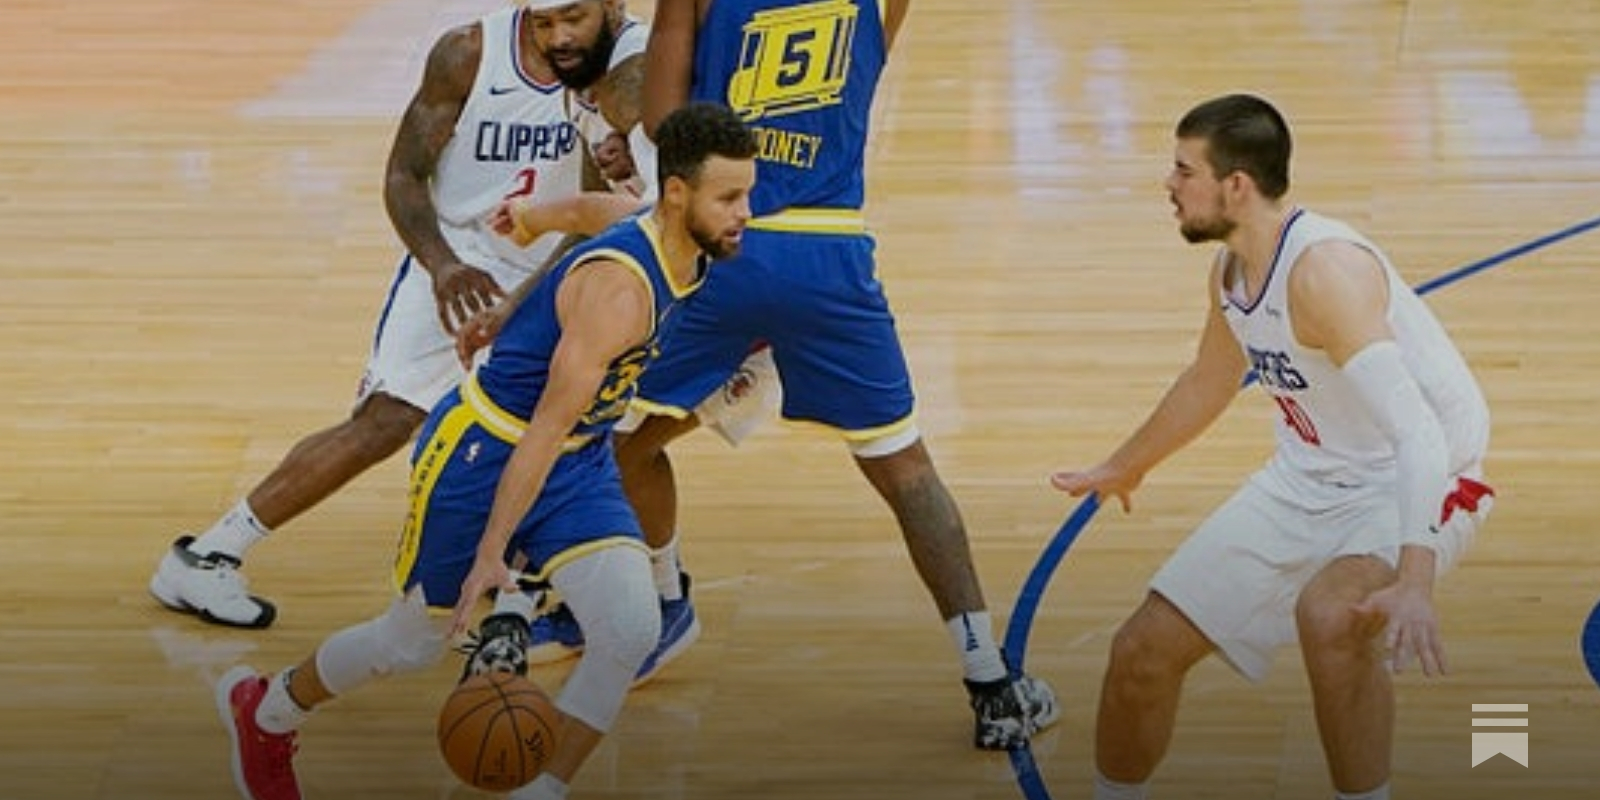 TrueHoop Presents: How the Golden State Warriors' Stephen Curry